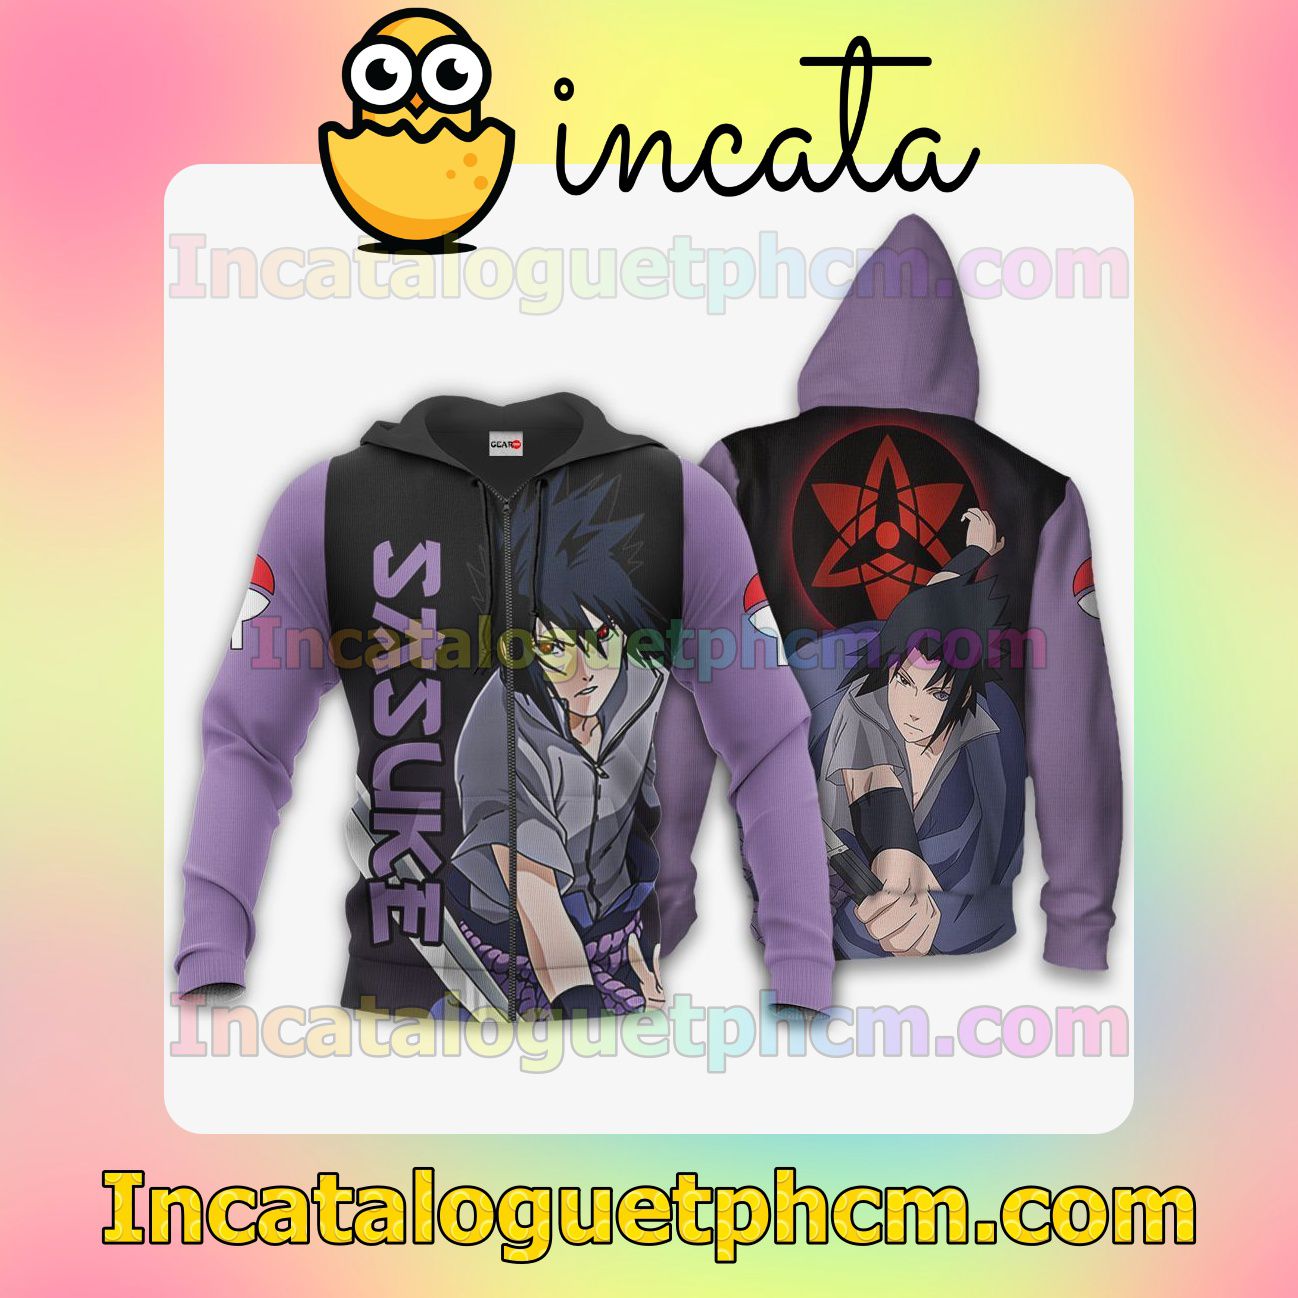 Uchiha Sasuke Sharingan Eyes Naruto Anime Clothing Merch Zip Hoodie Jacket Shirts